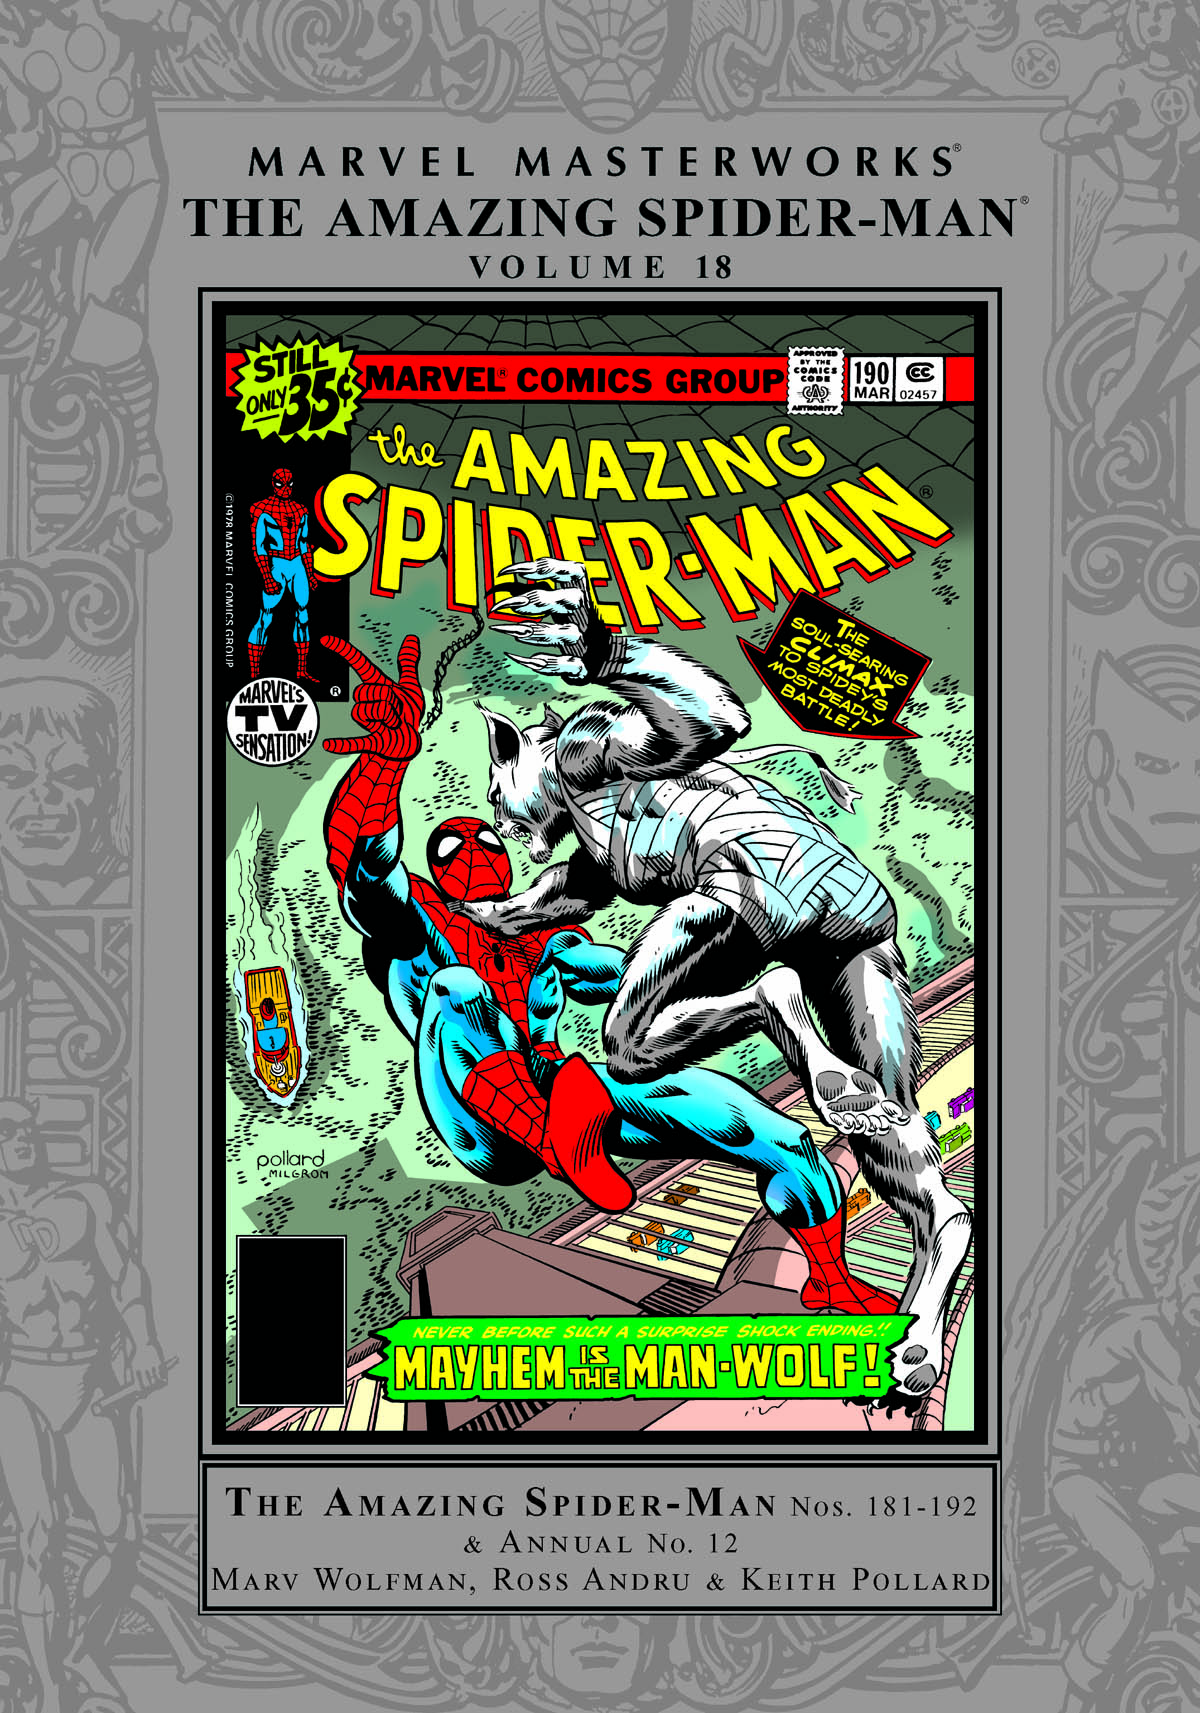 Marvel Masterworks: The Amazing Spider-Man Vol. 18 (Trade Paperback)